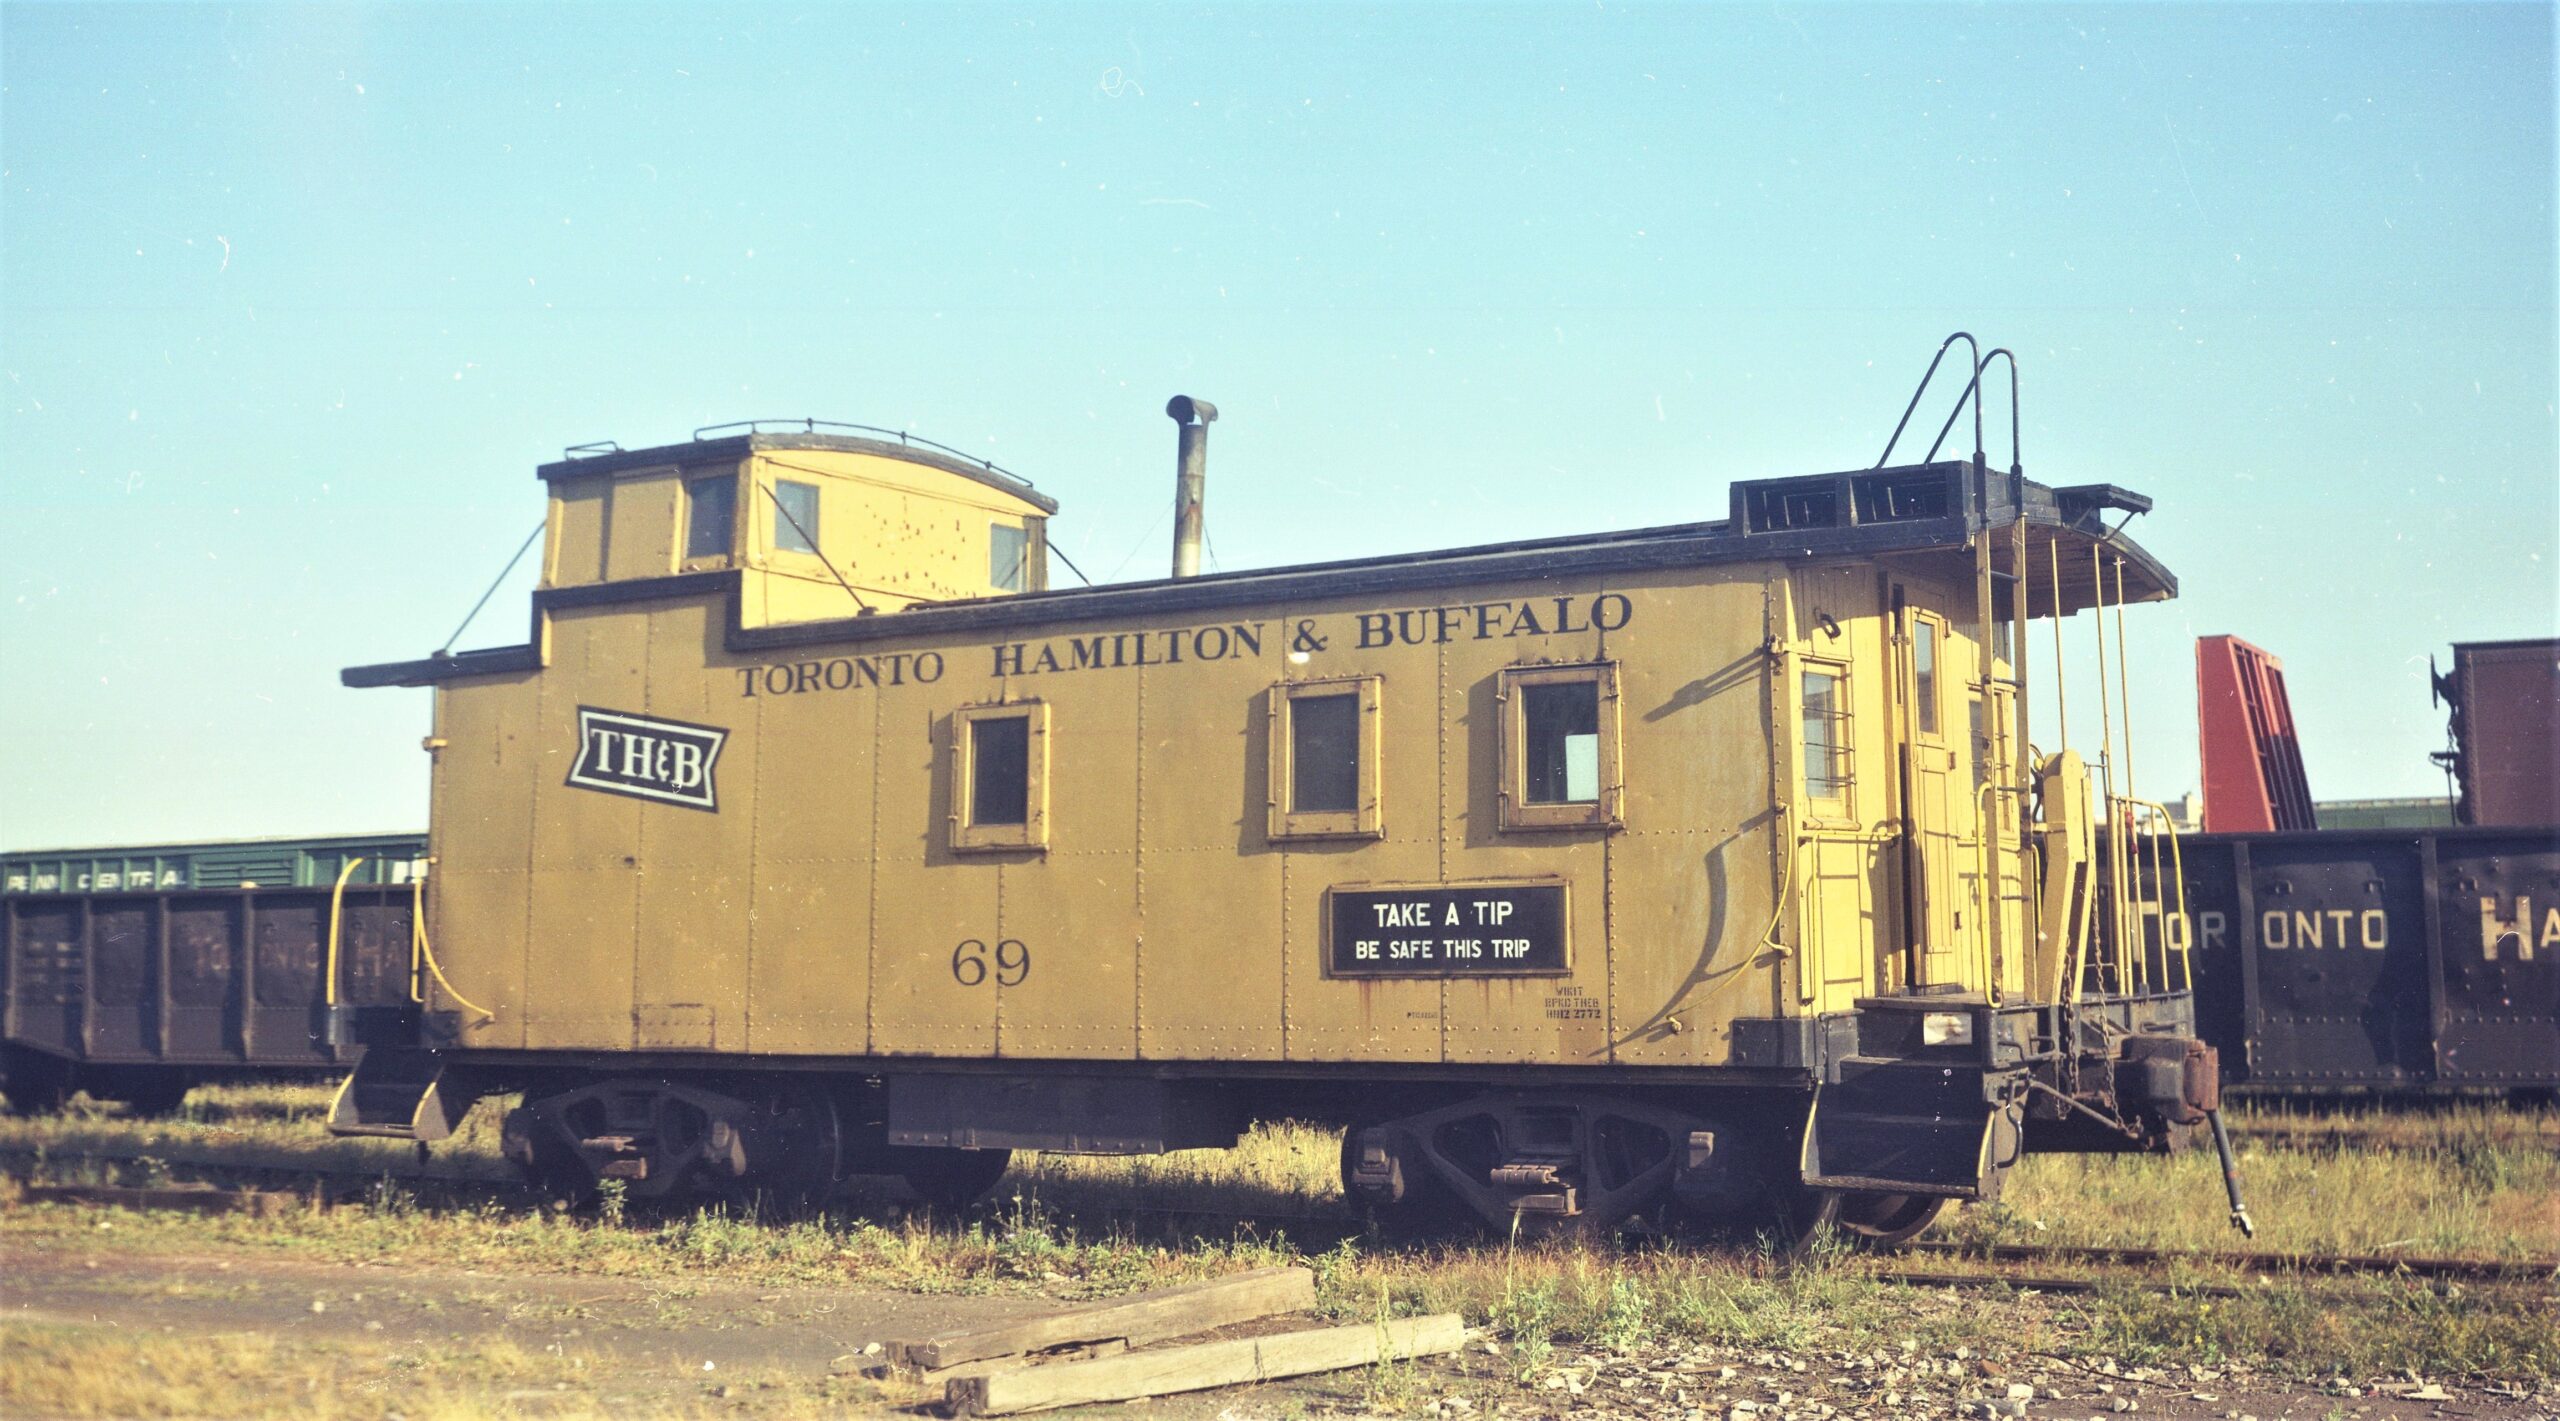 Toronto, Hamilton and Buffalo Railroad | TH&B | Hamilton, Ont. Canada | Caboose #69 | H.B. Olsen photo | September 5, 1974